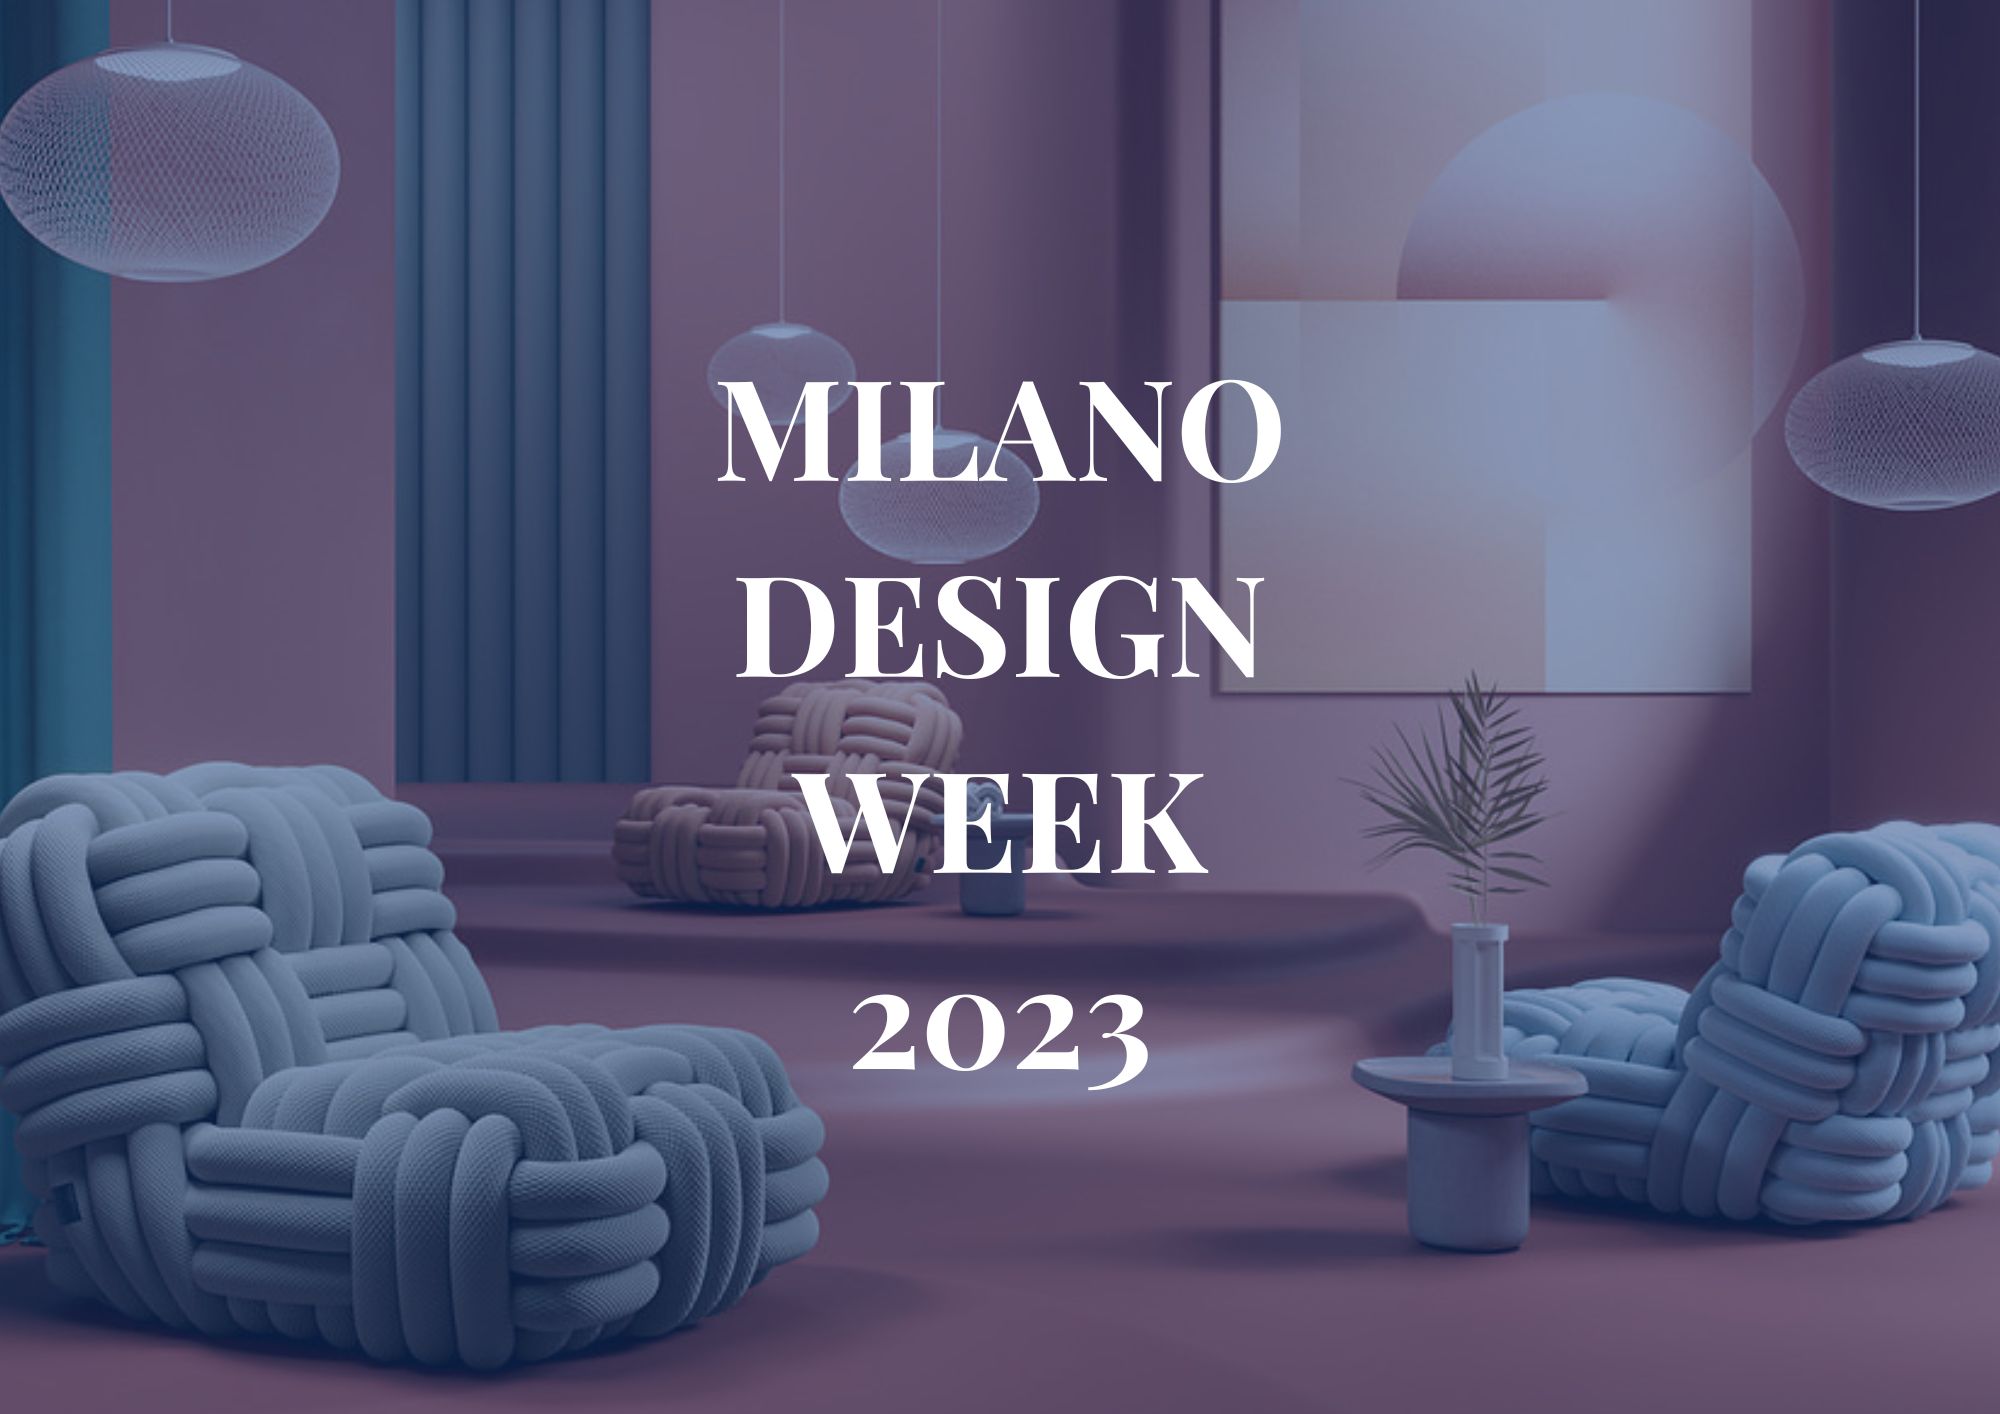 Milano Design Week 2023: cosa vedere nel weekend